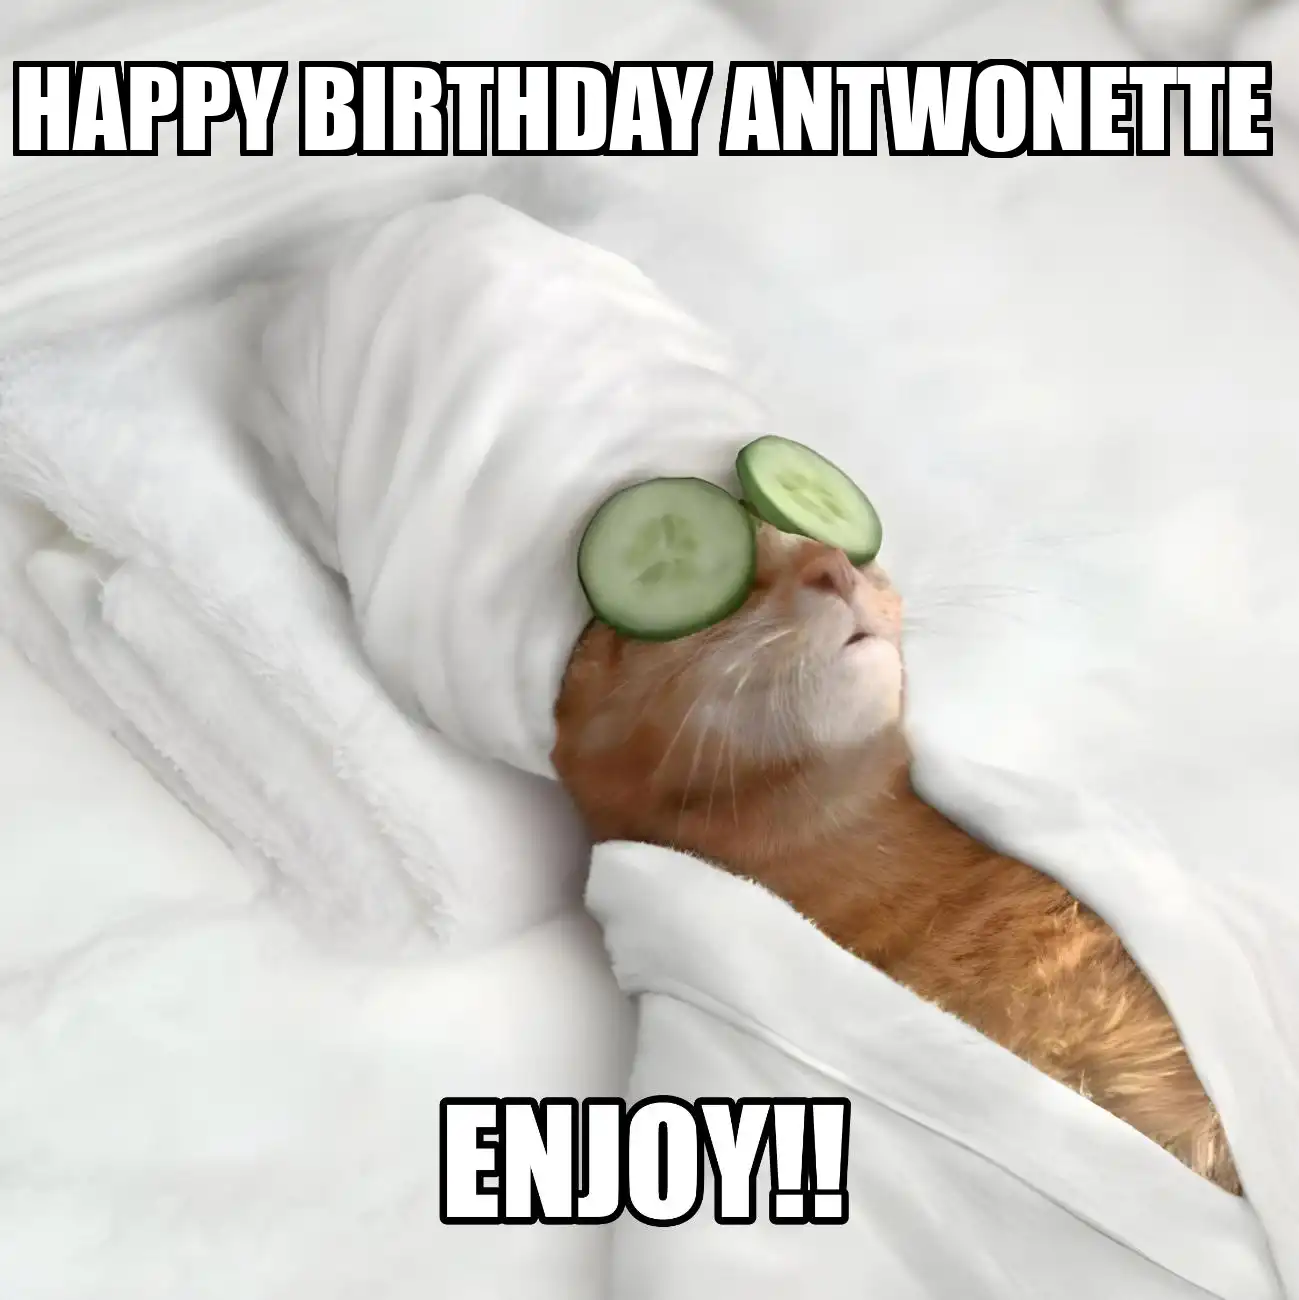 Happy Birthday Antwonette Enjoy Cat Meme